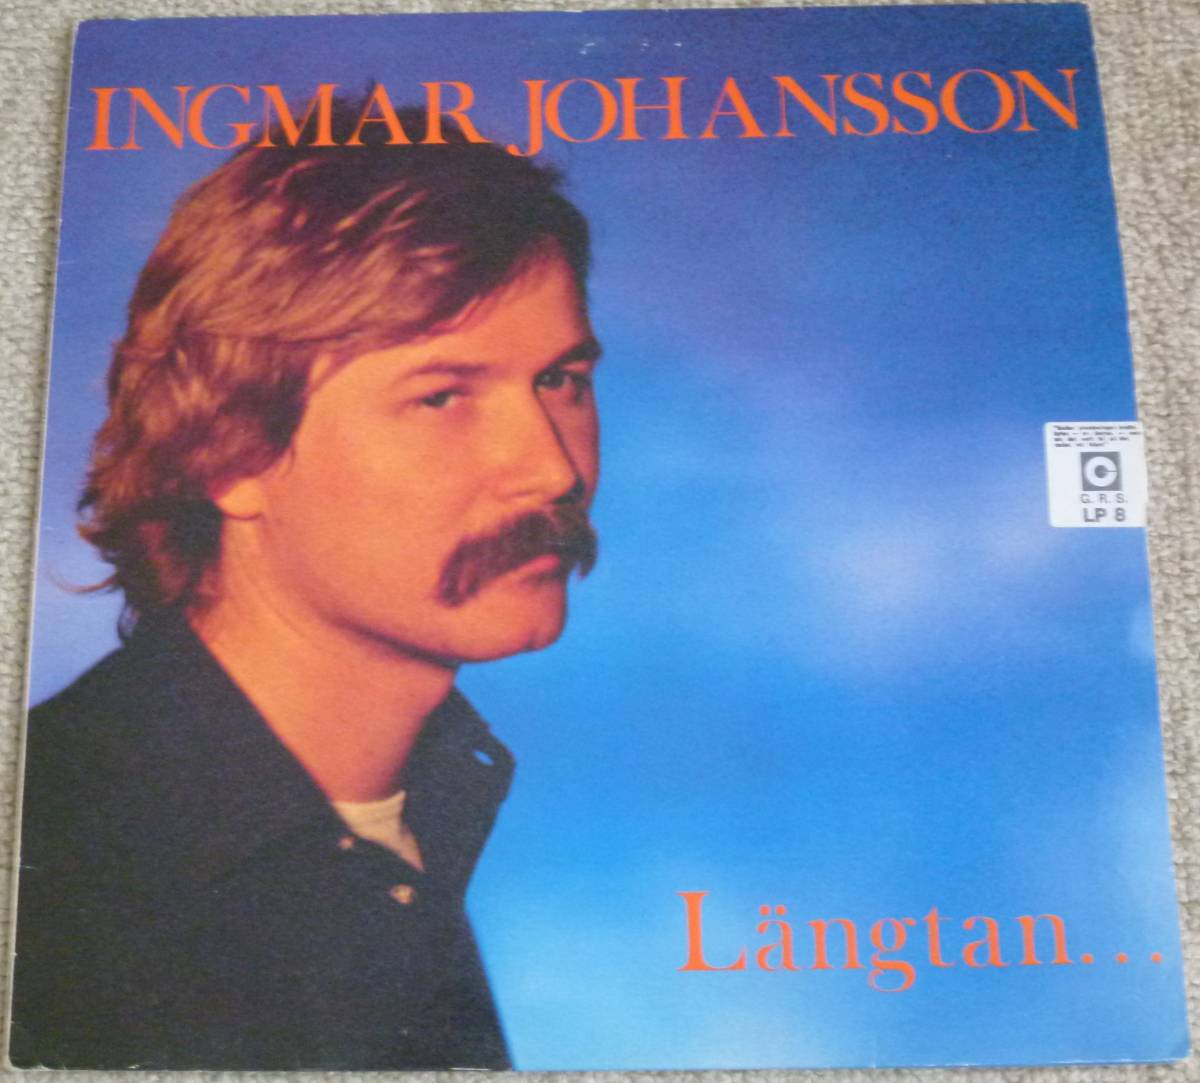 Ingmar Johansson『Lngtan...』LP AOR Soft Rock ソフトロック_画像1